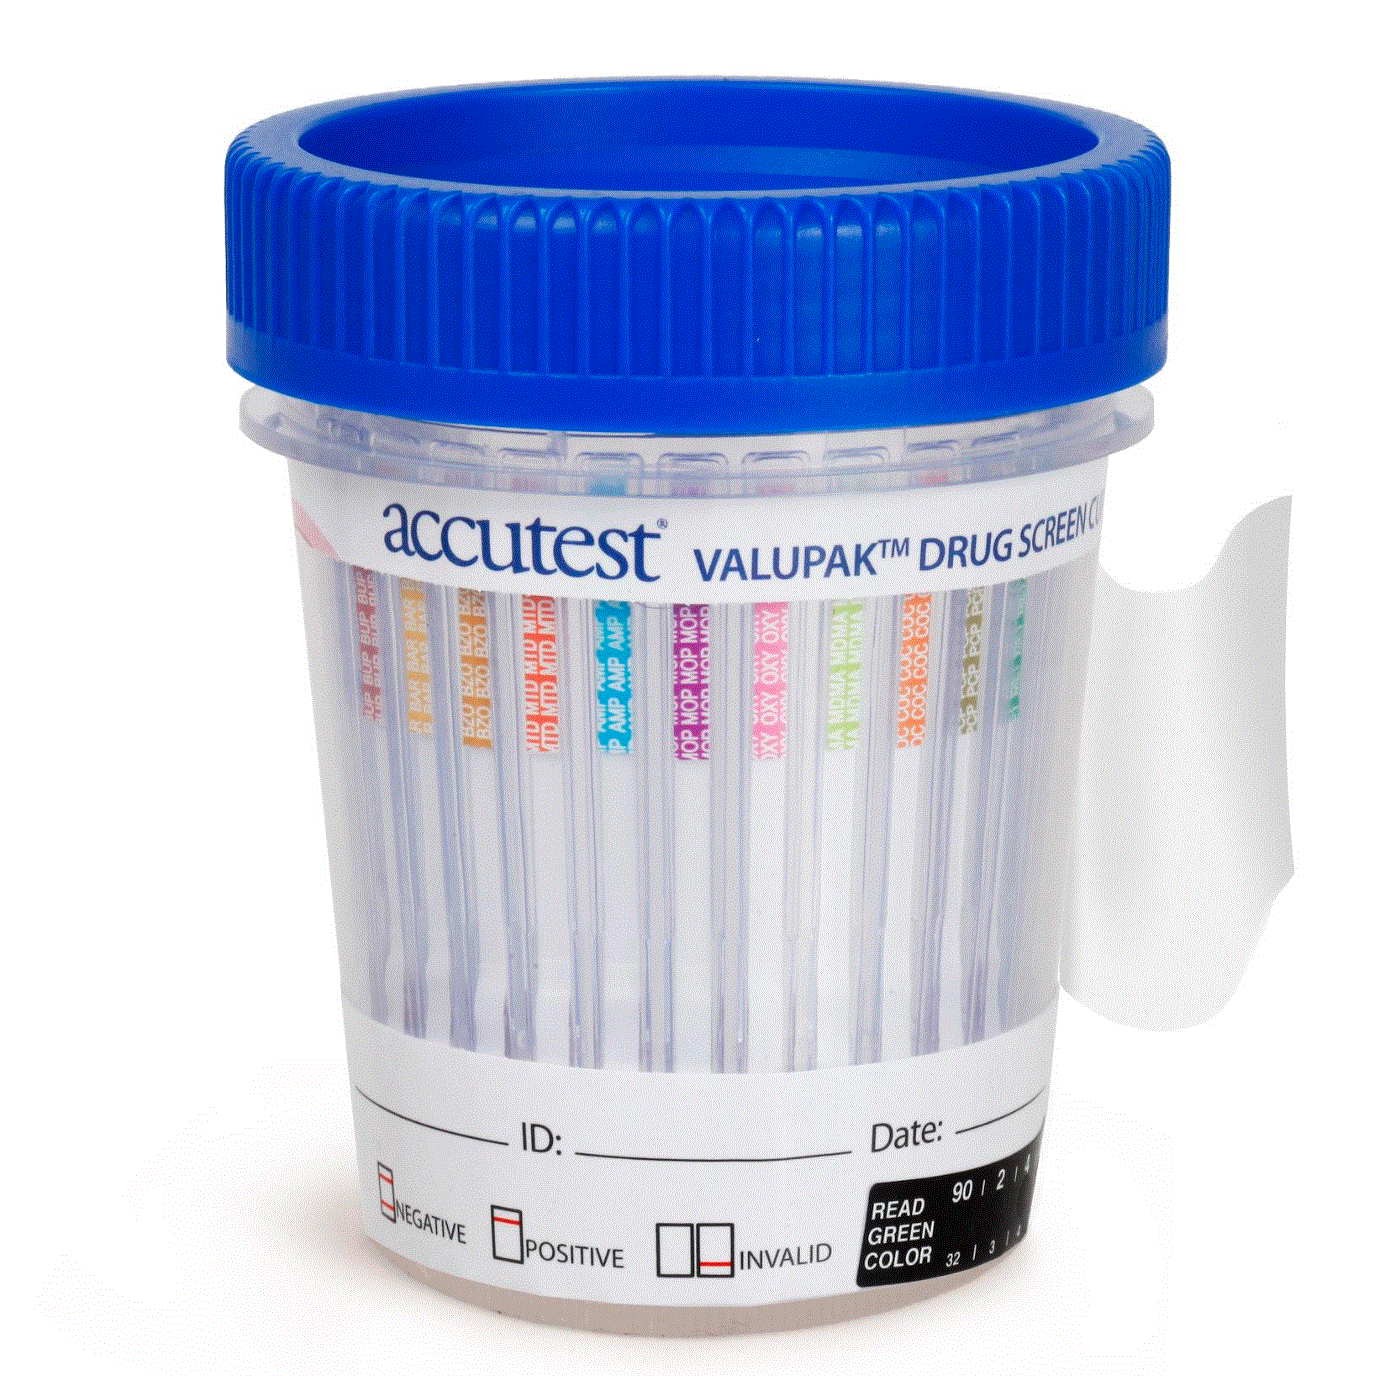 12 Panel Drug Test - Accutest ValuPak™ Drug Test Cup 12 Panel